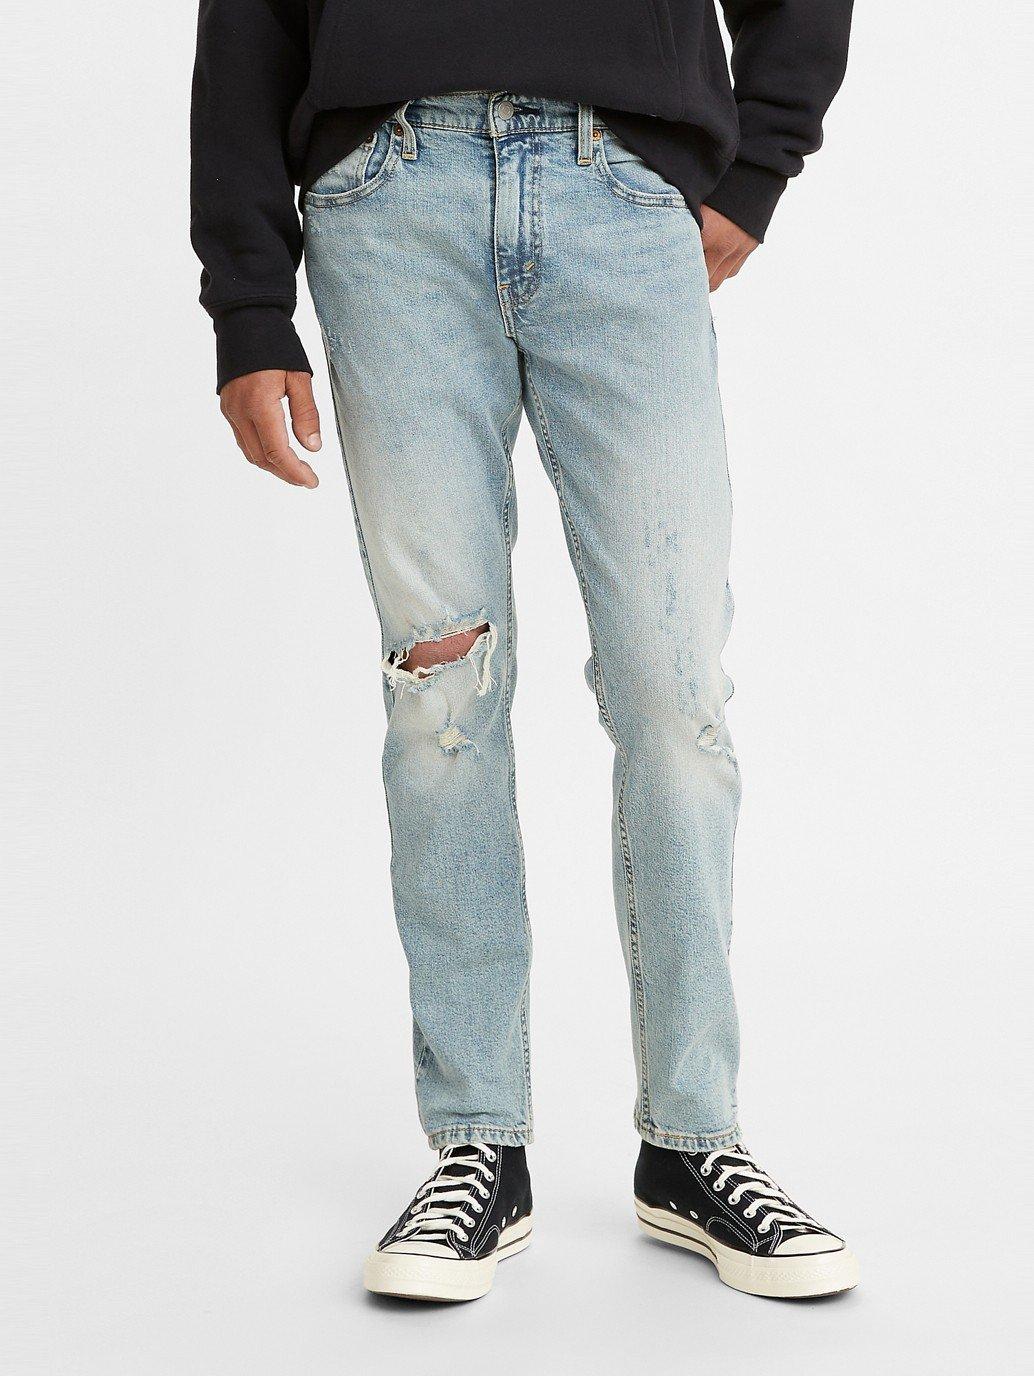 Buy Levi's® Men's 512™ Slim Taper Jeans | Levi's® Official Online Store SG